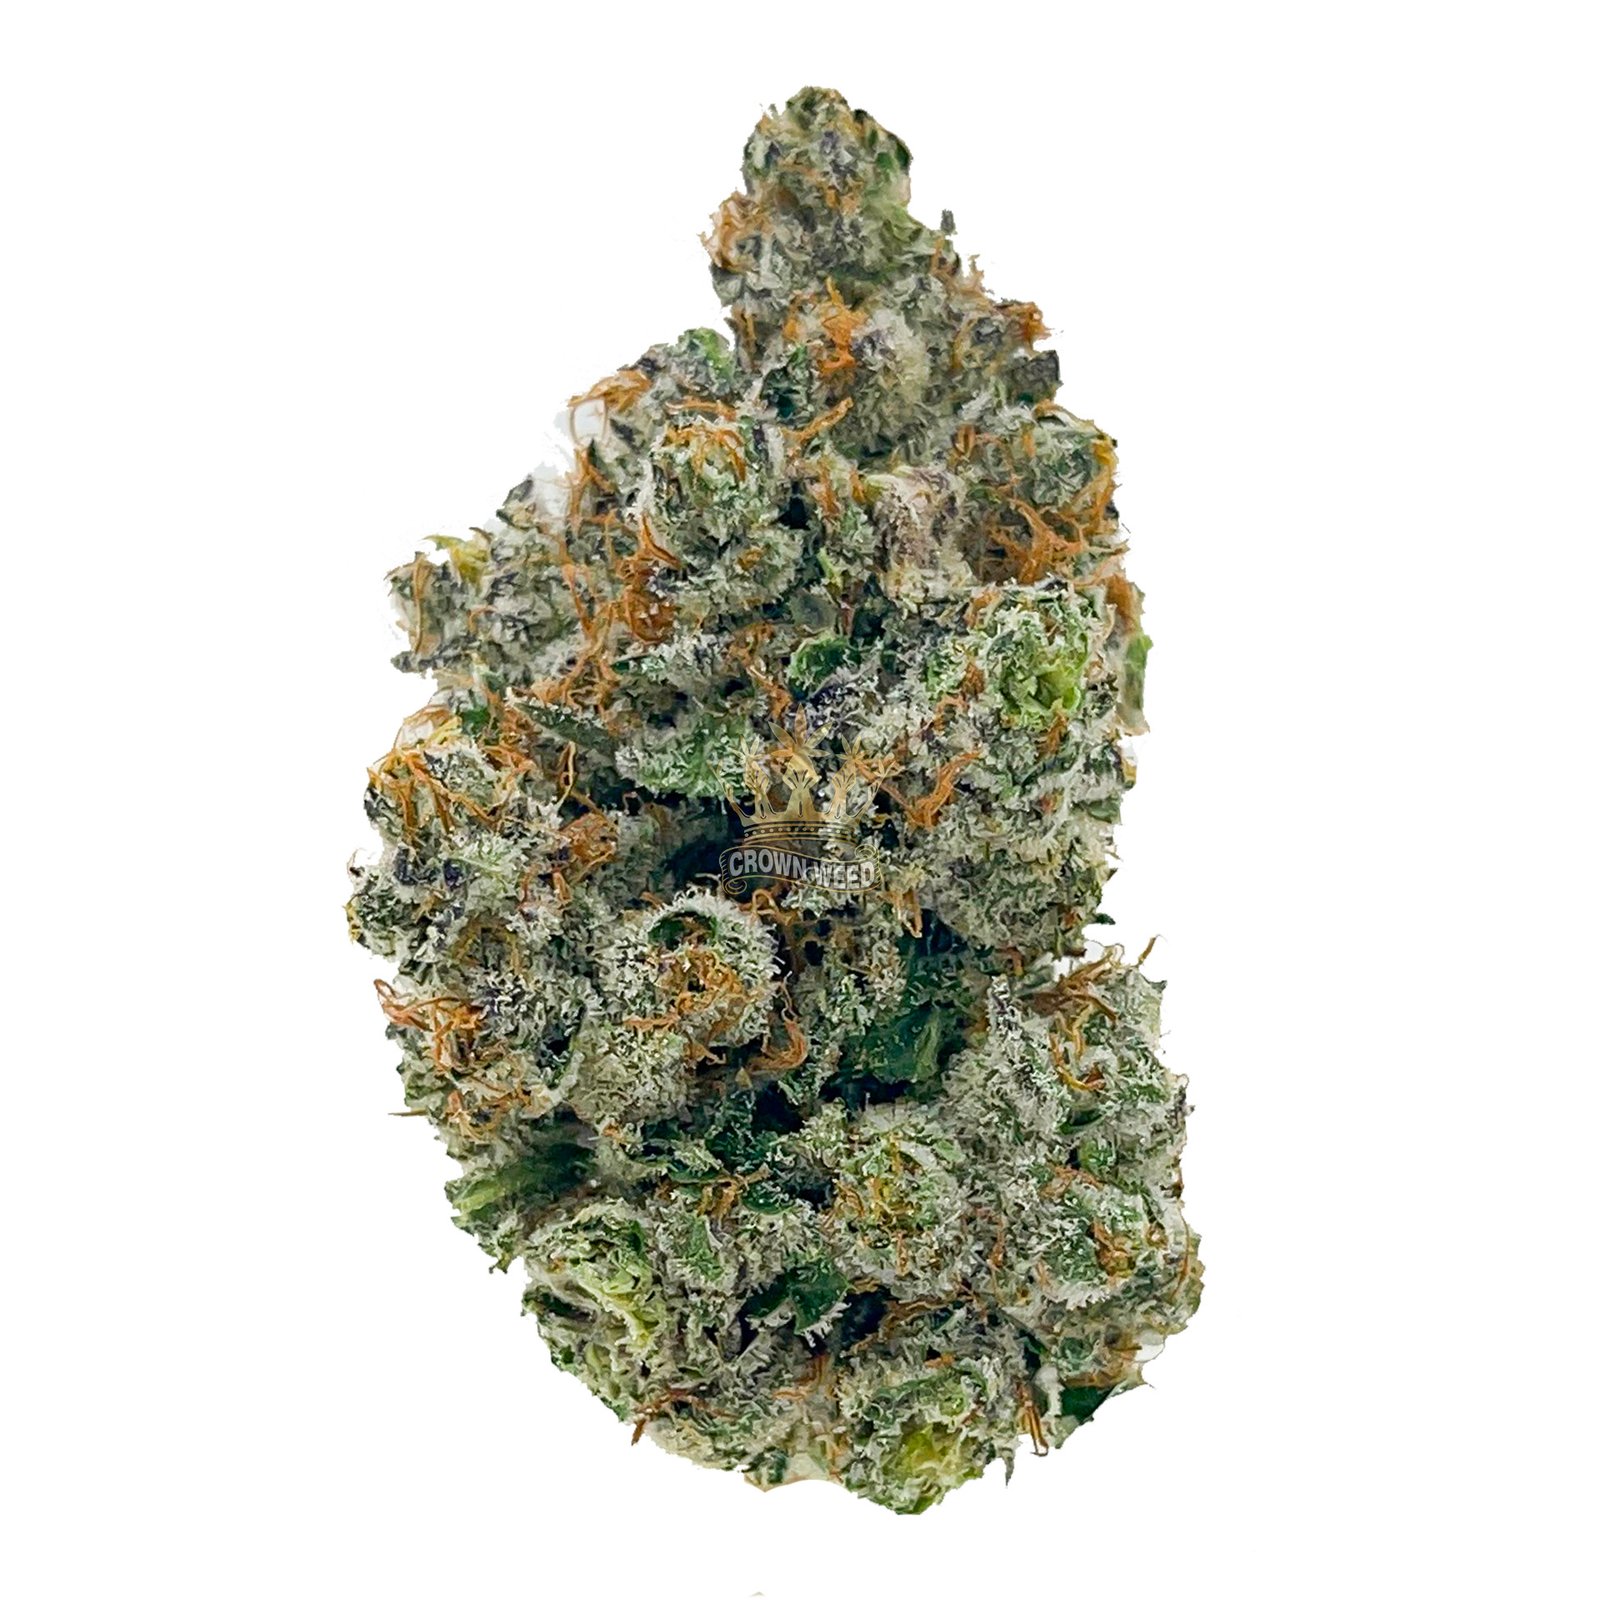 Skywalker cannabis weed strain